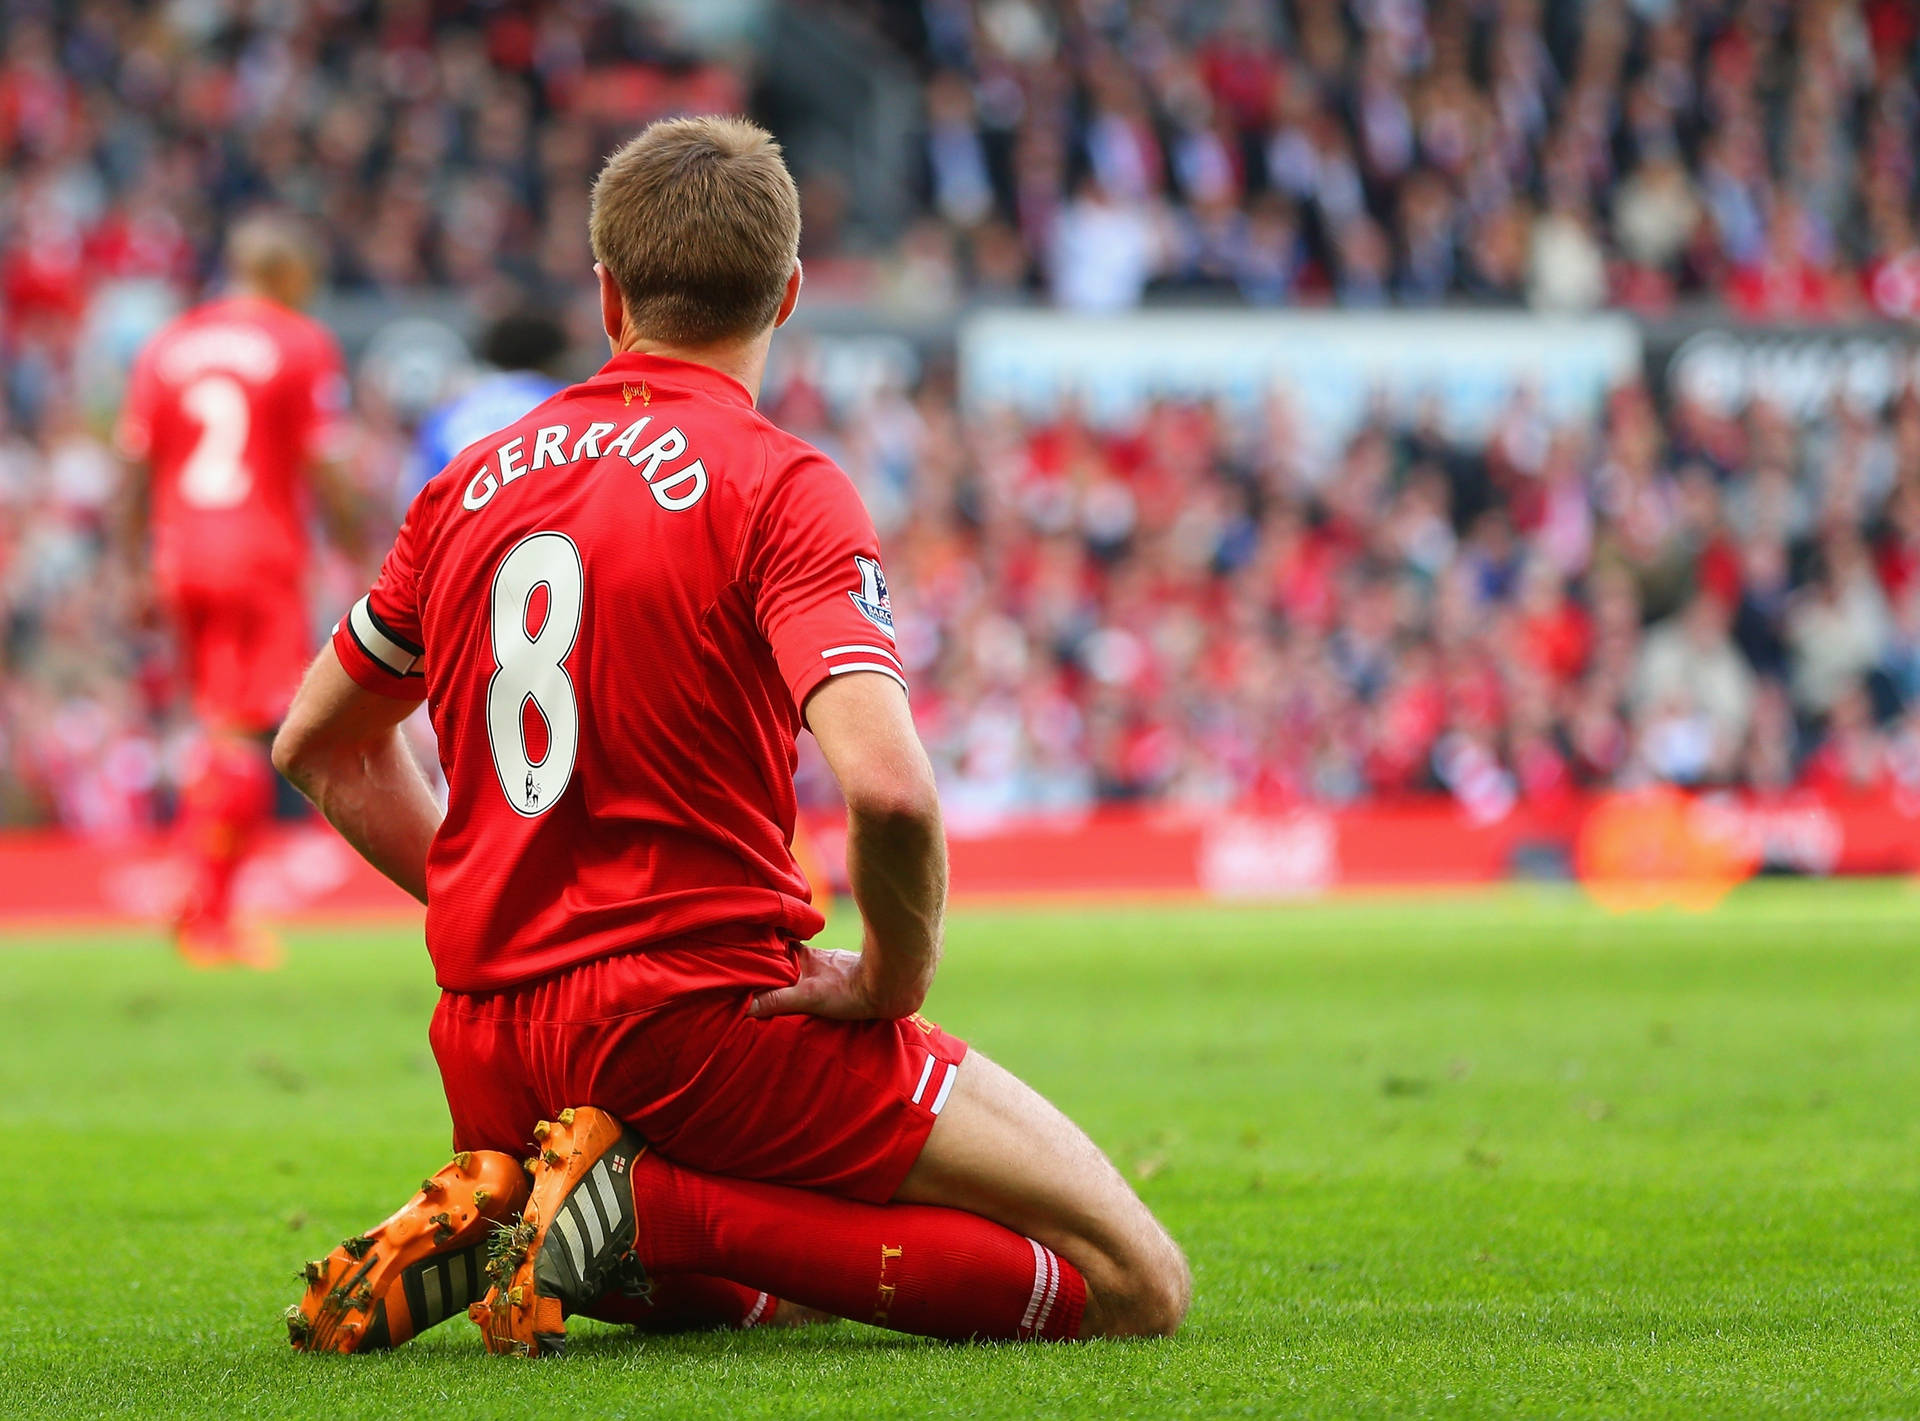 Steven Gerrard Number 8 Liverpool Player Background